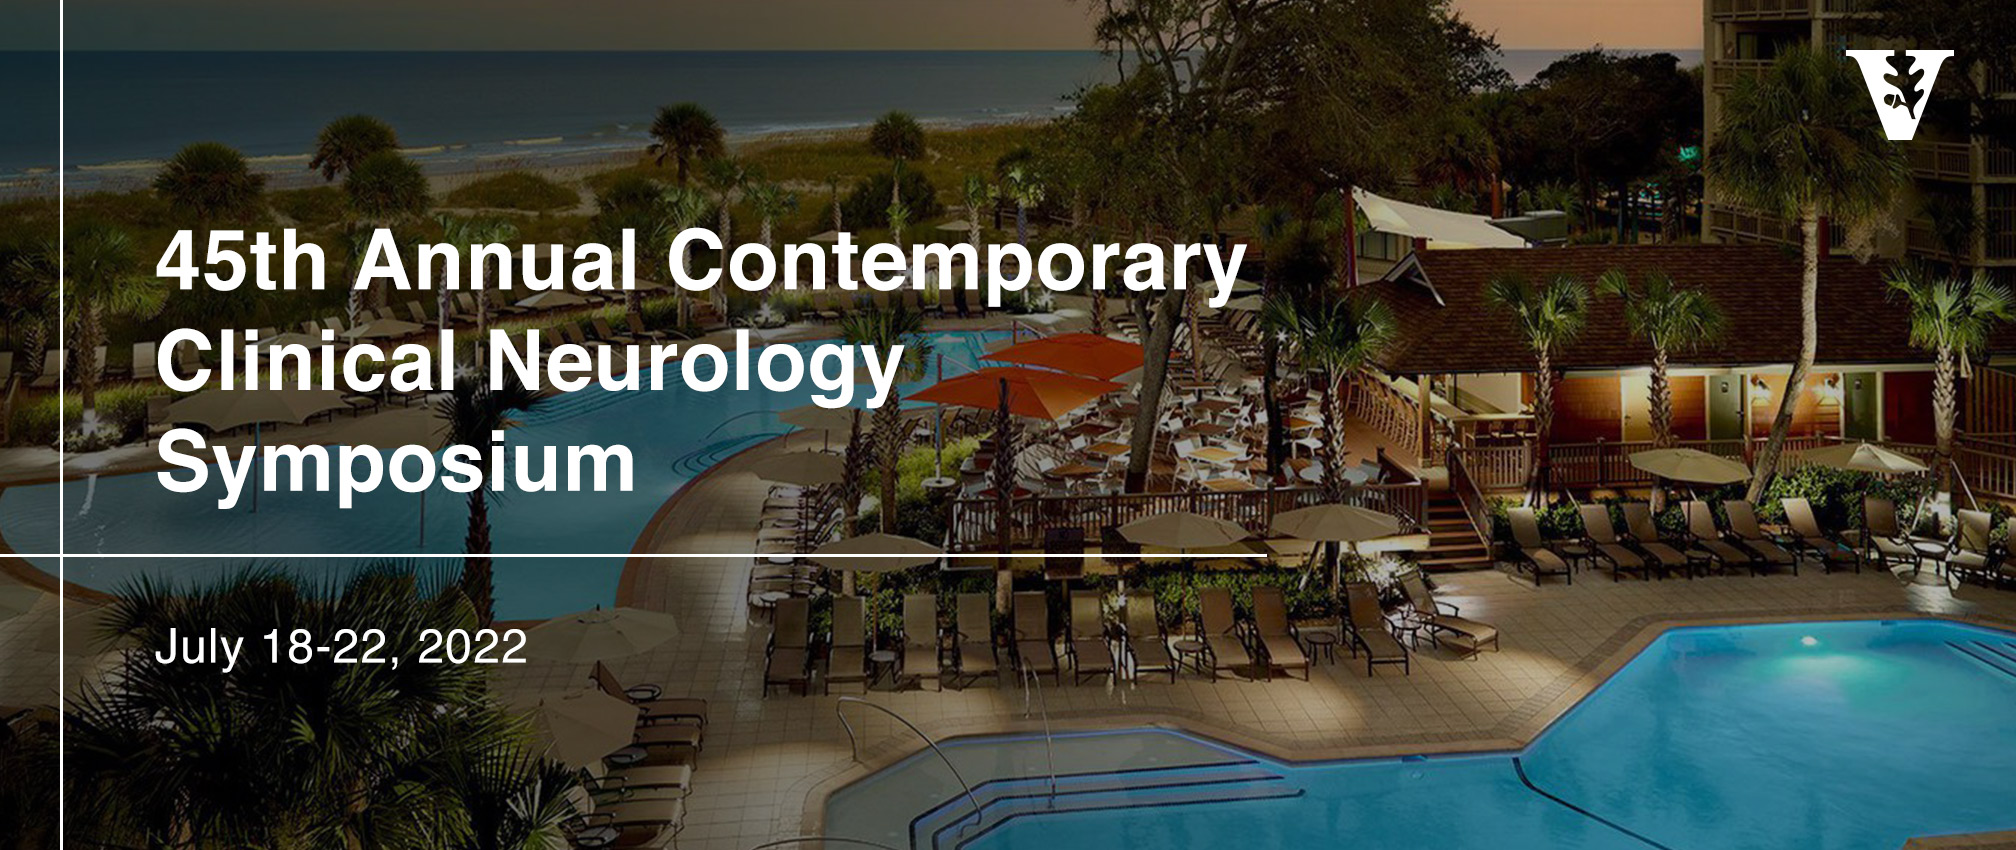 45th Annual Contemporary Clinical Neurology Symposium